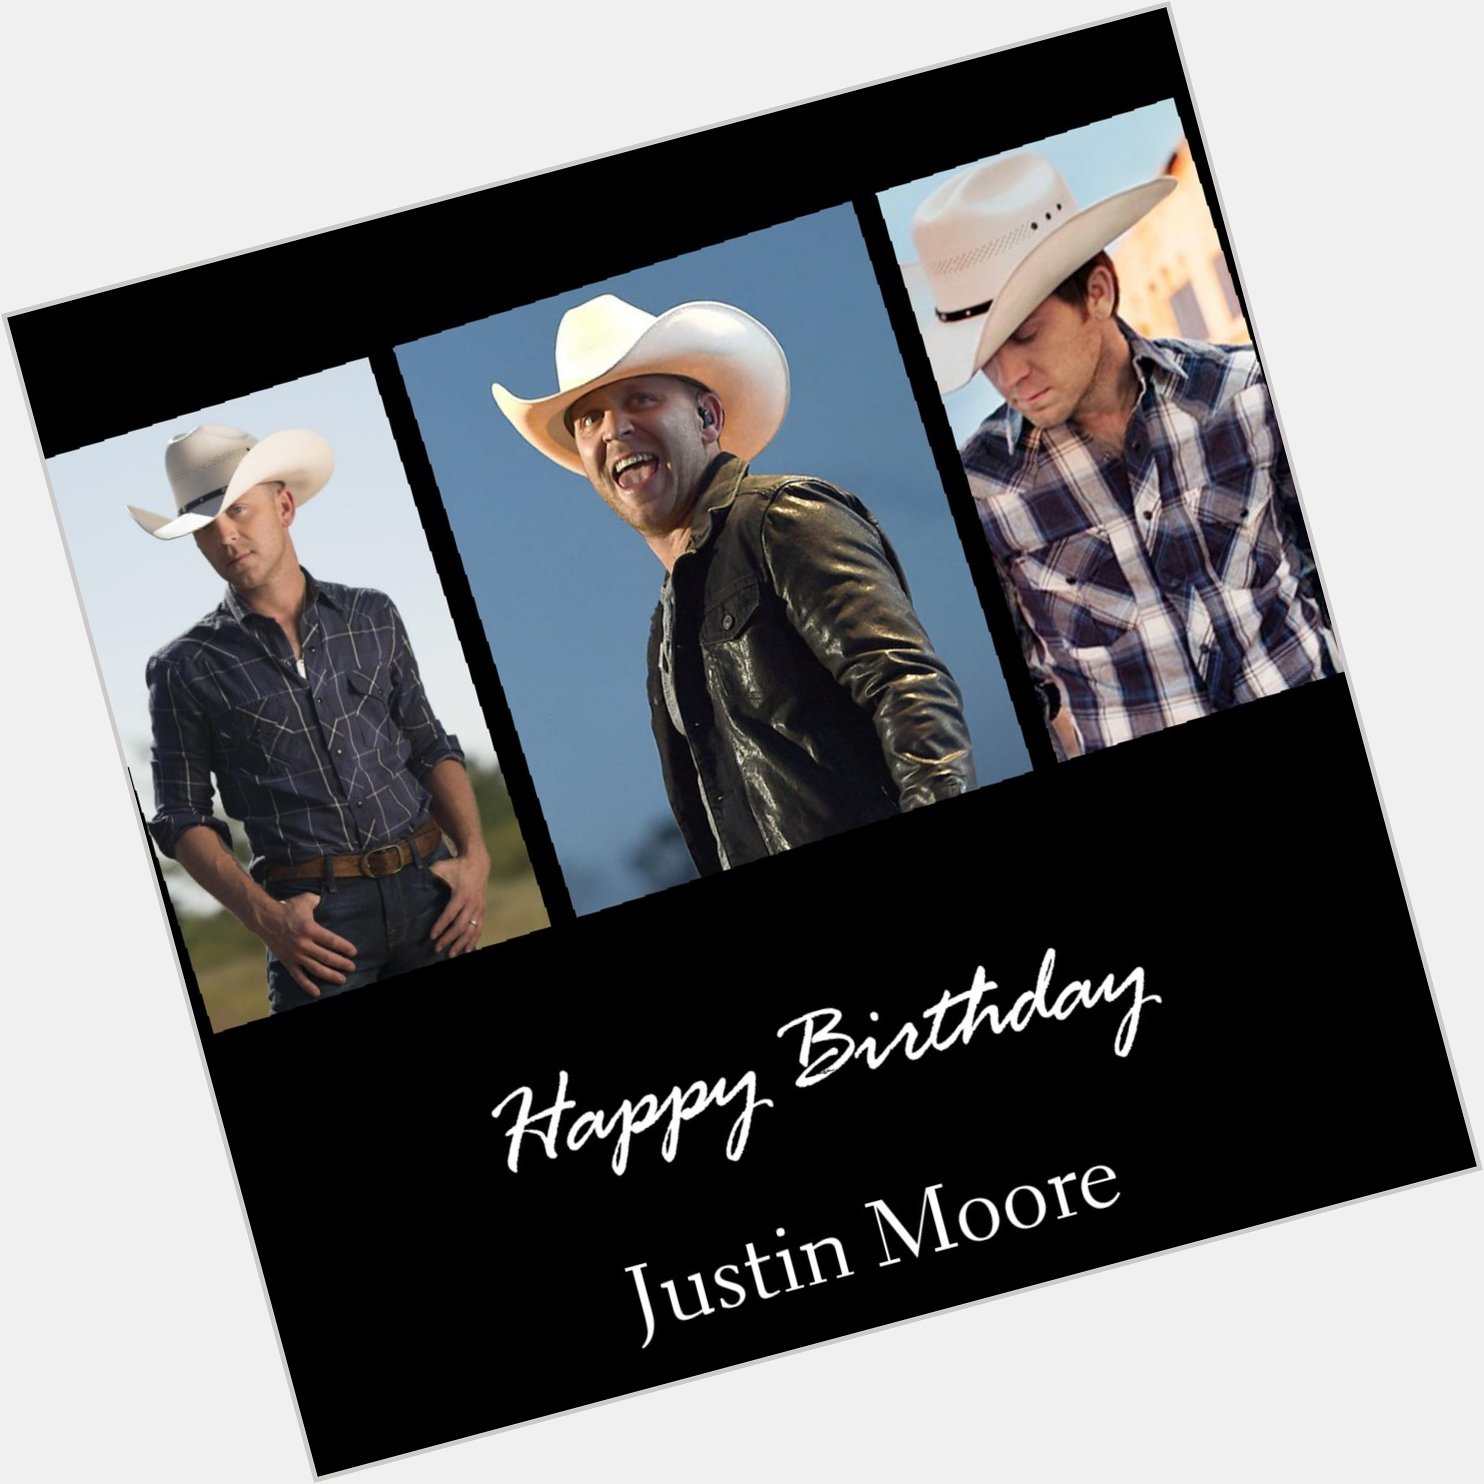 Sending Justin Moore a very Happy Birthday! 